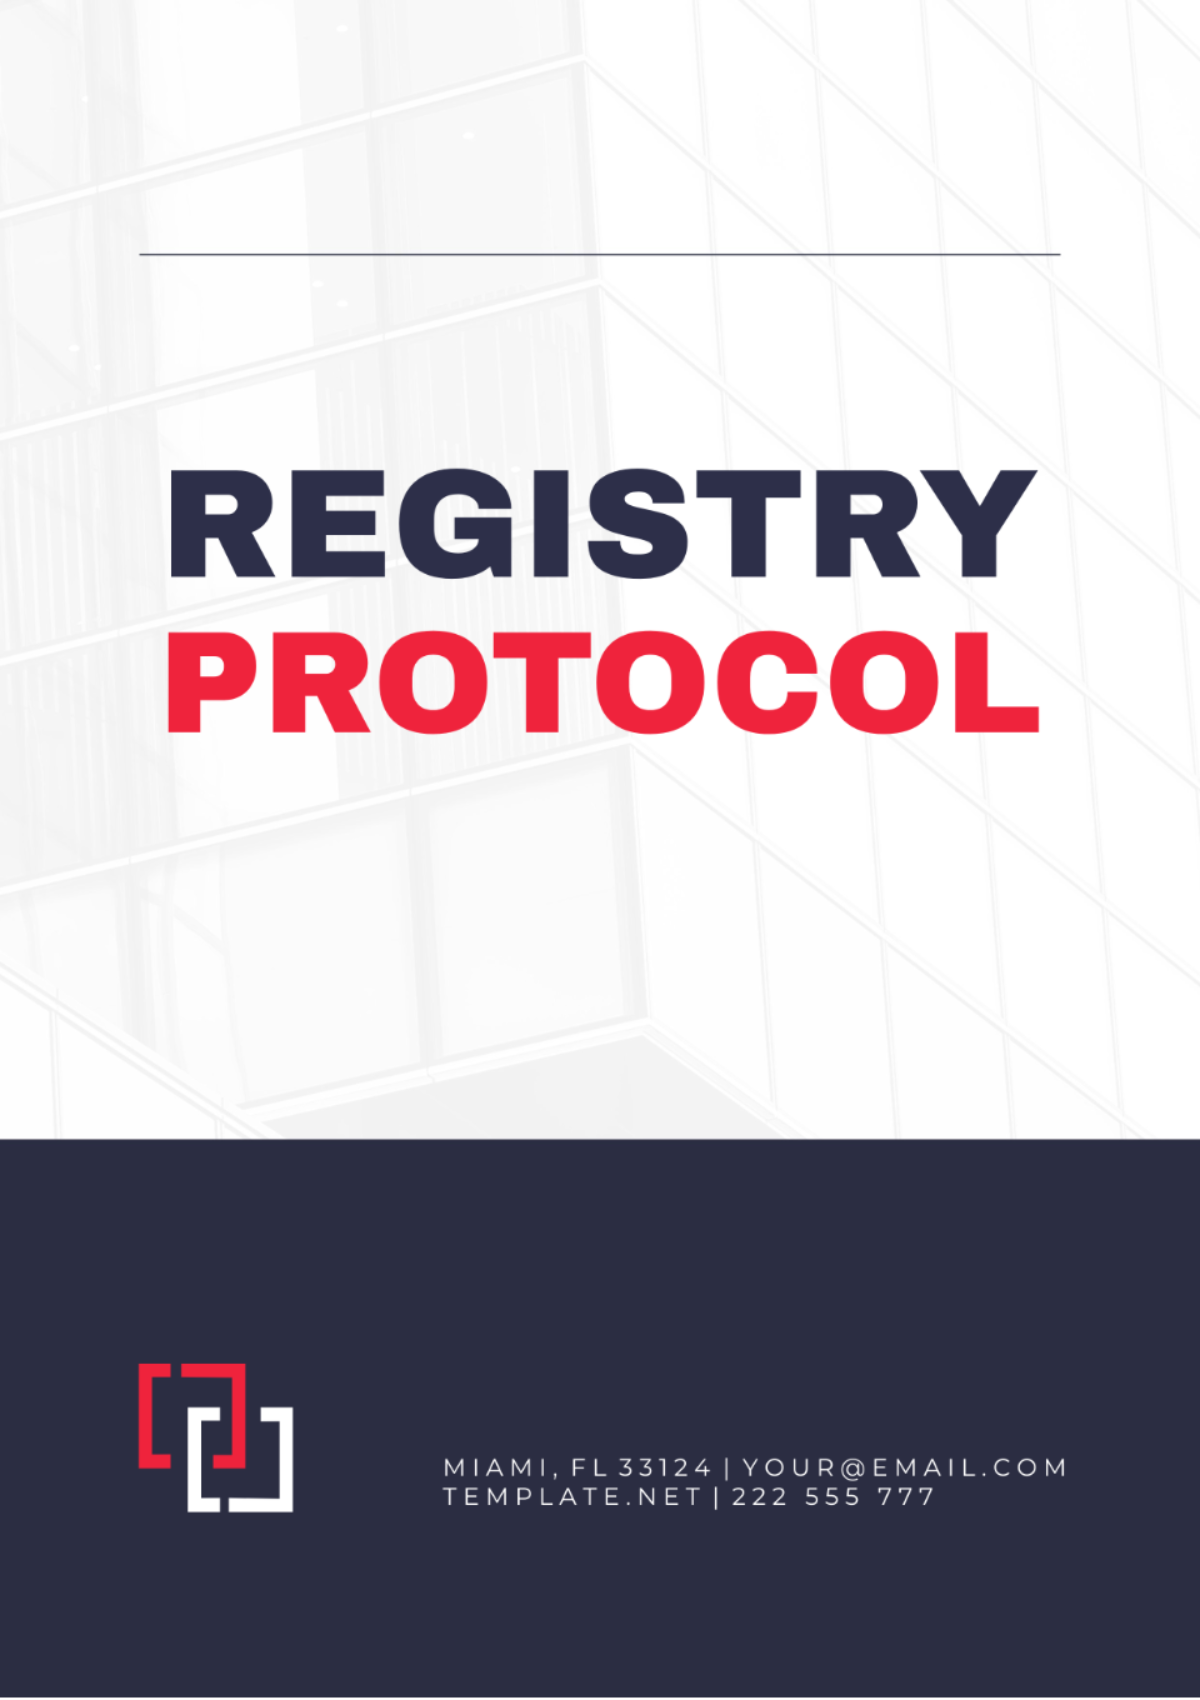 Free Registry Protocol Template